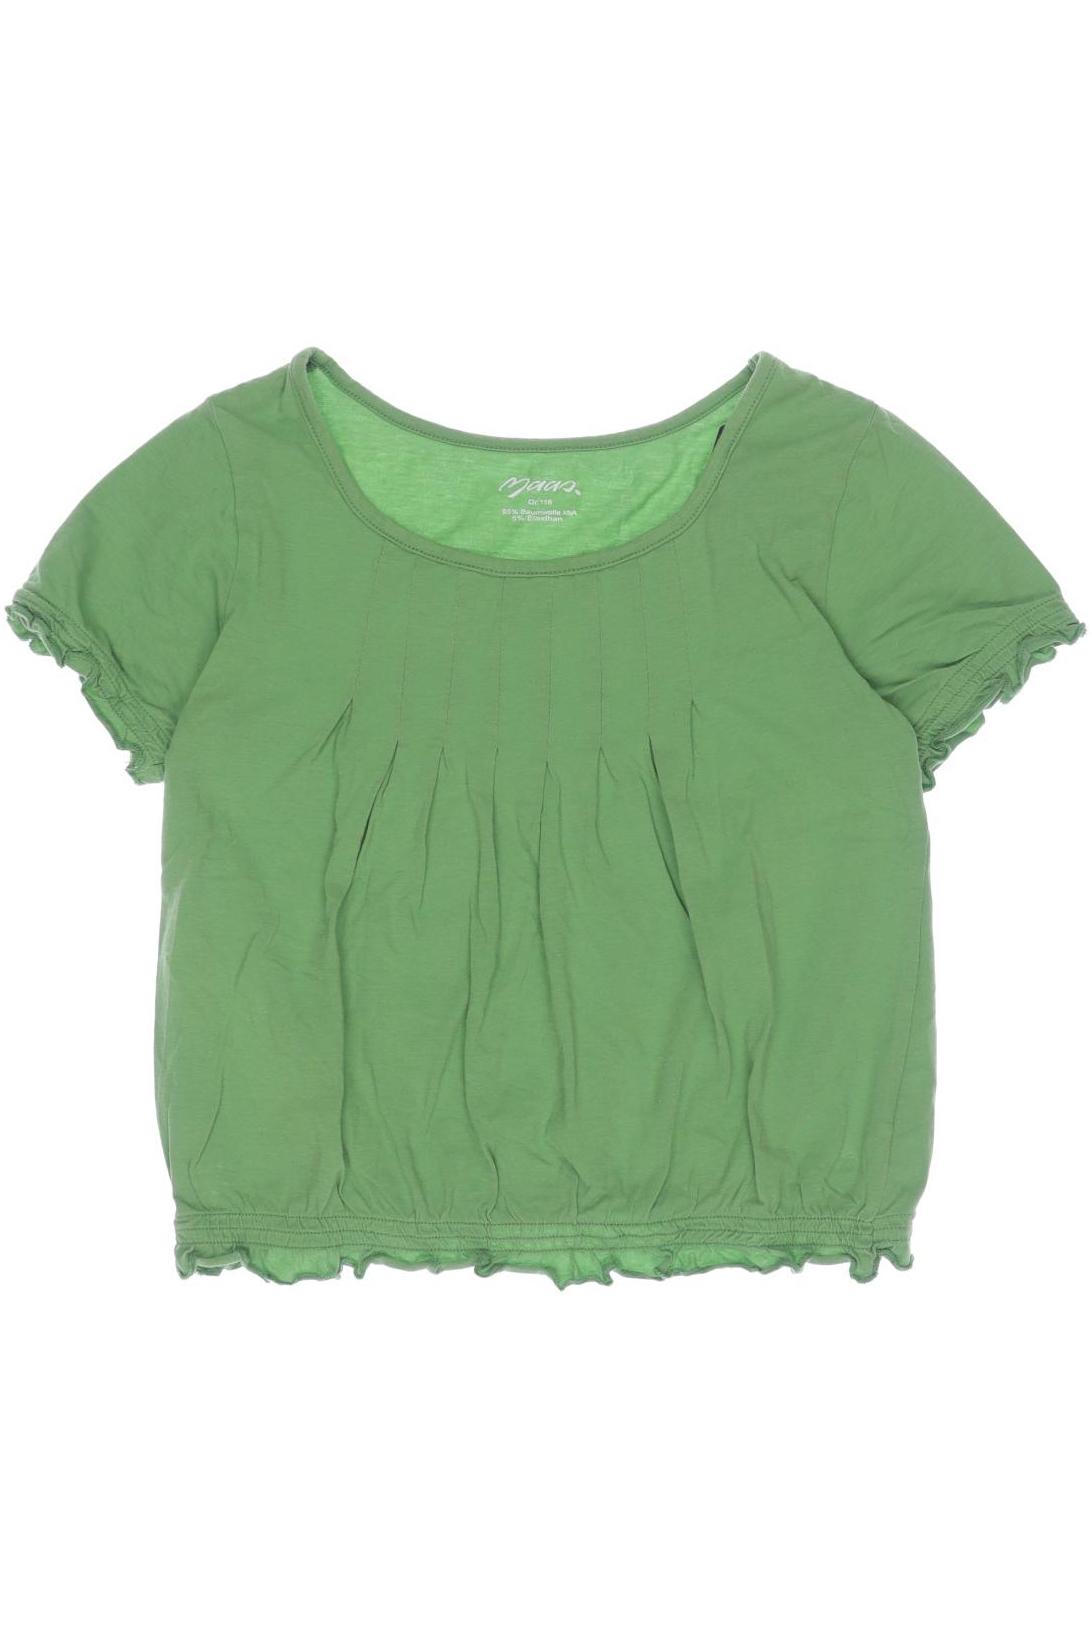 Maas Mädchen T-Shirt, grün von Maas